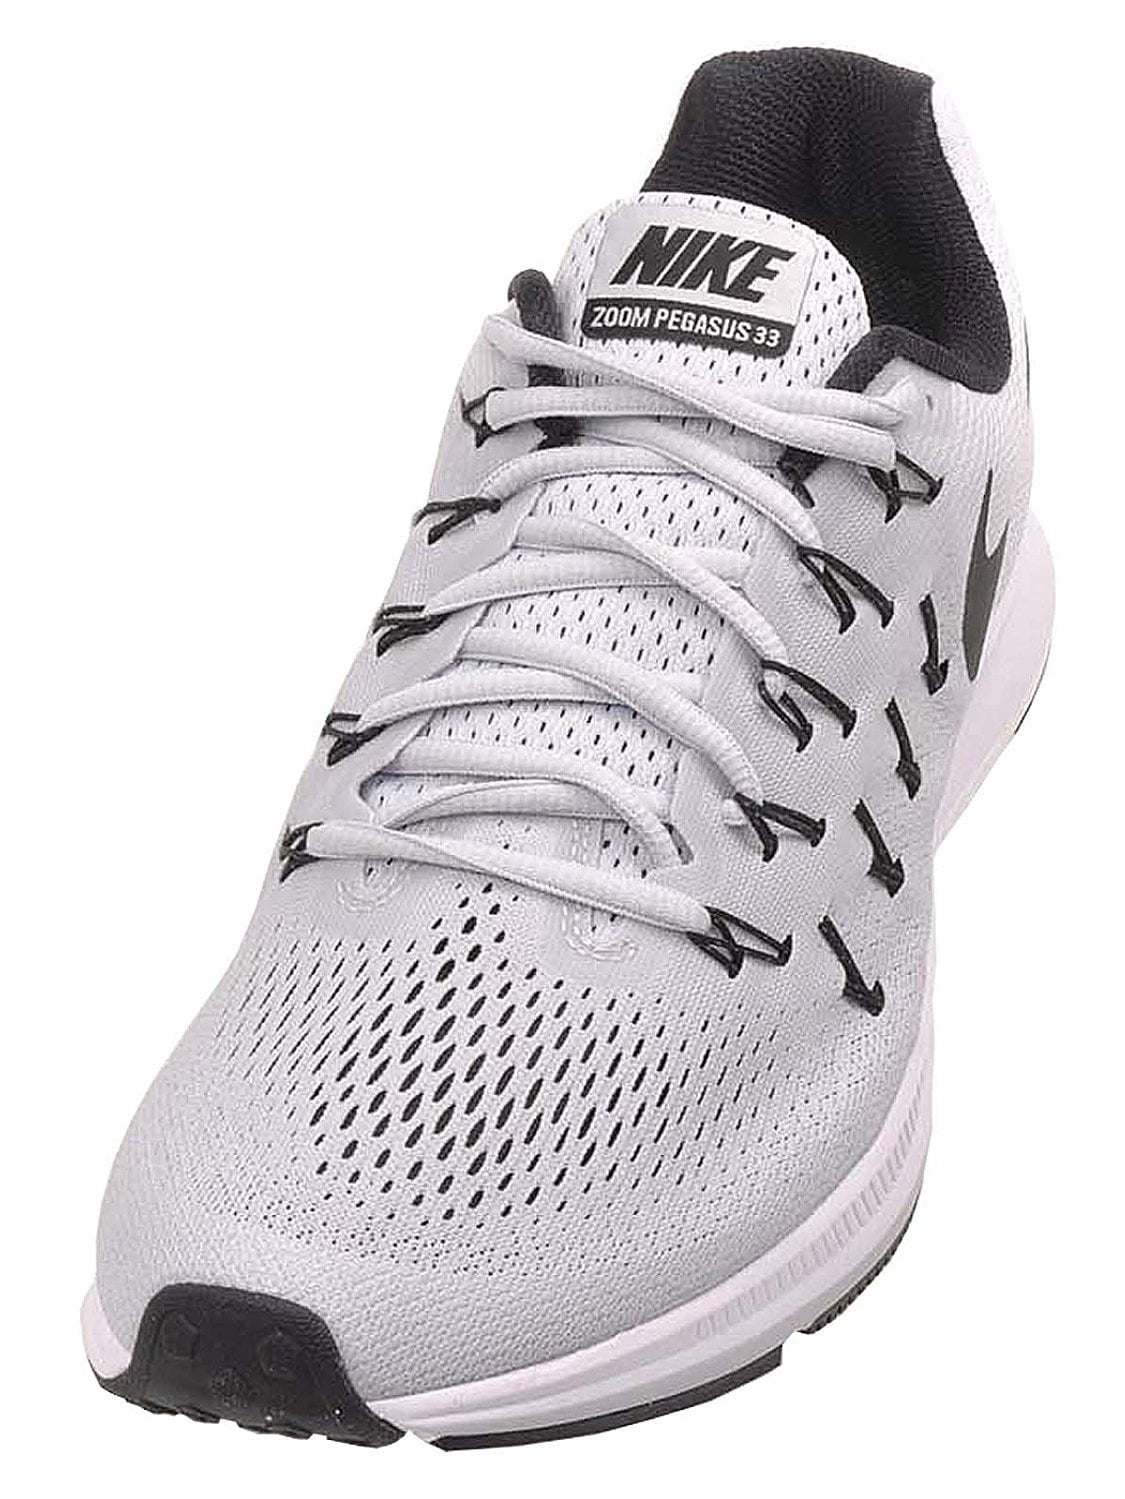 Permeabilidad Mucho quiero Nike Men's Air Zoom Pegasus 33 Running Shoe - Walmart.com